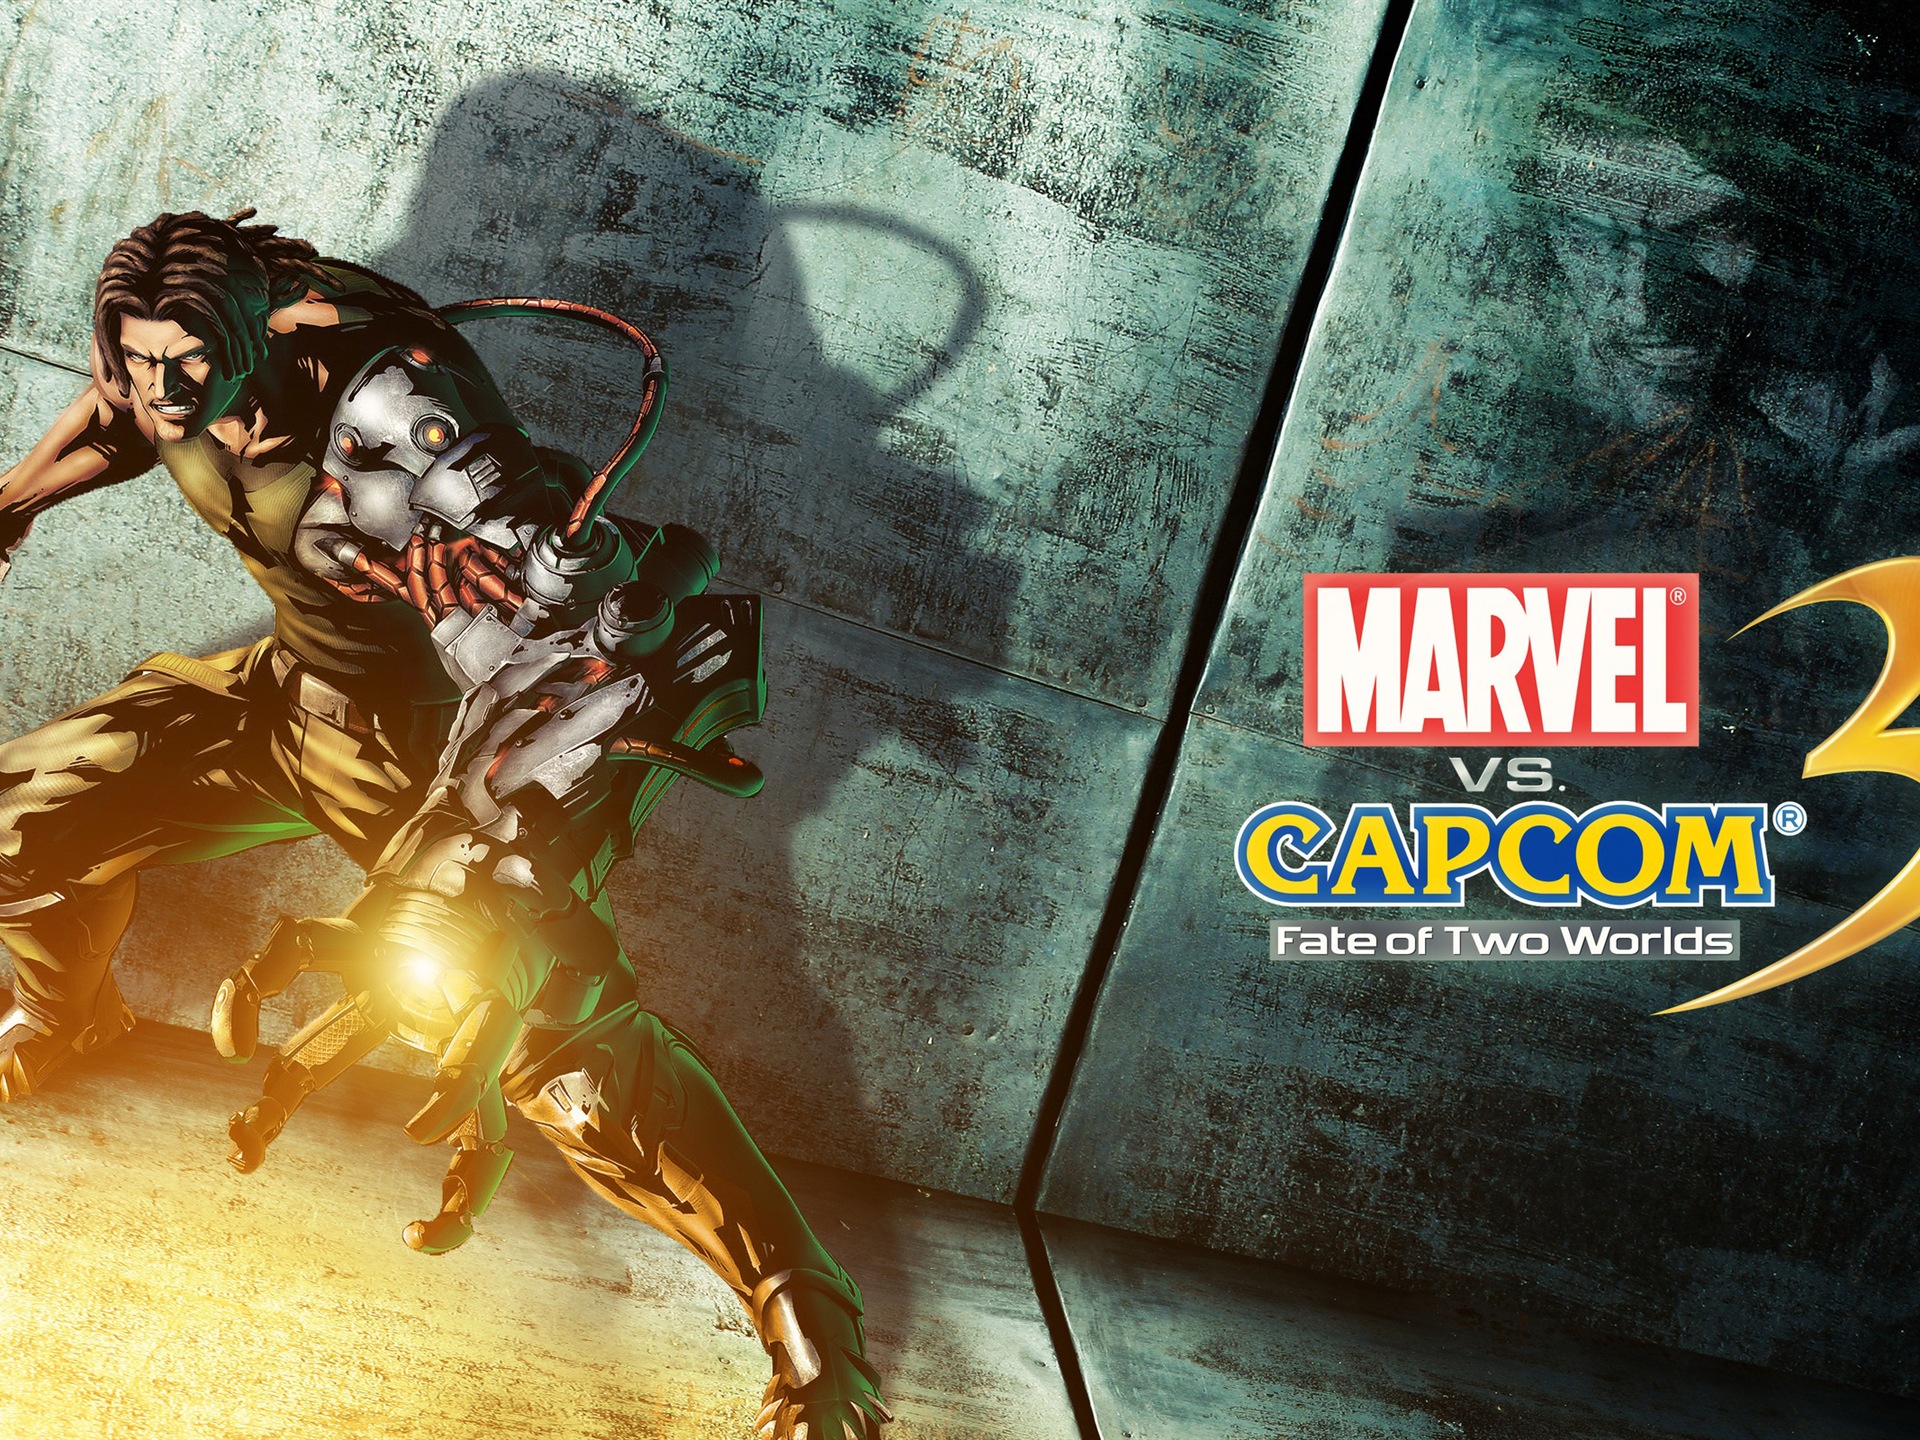 Marvel VS. Capcom 3: Fate of Two Worlds 漫畫英雄VS.卡普空3 高清遊戲壁紙 #8 - 1920x1440